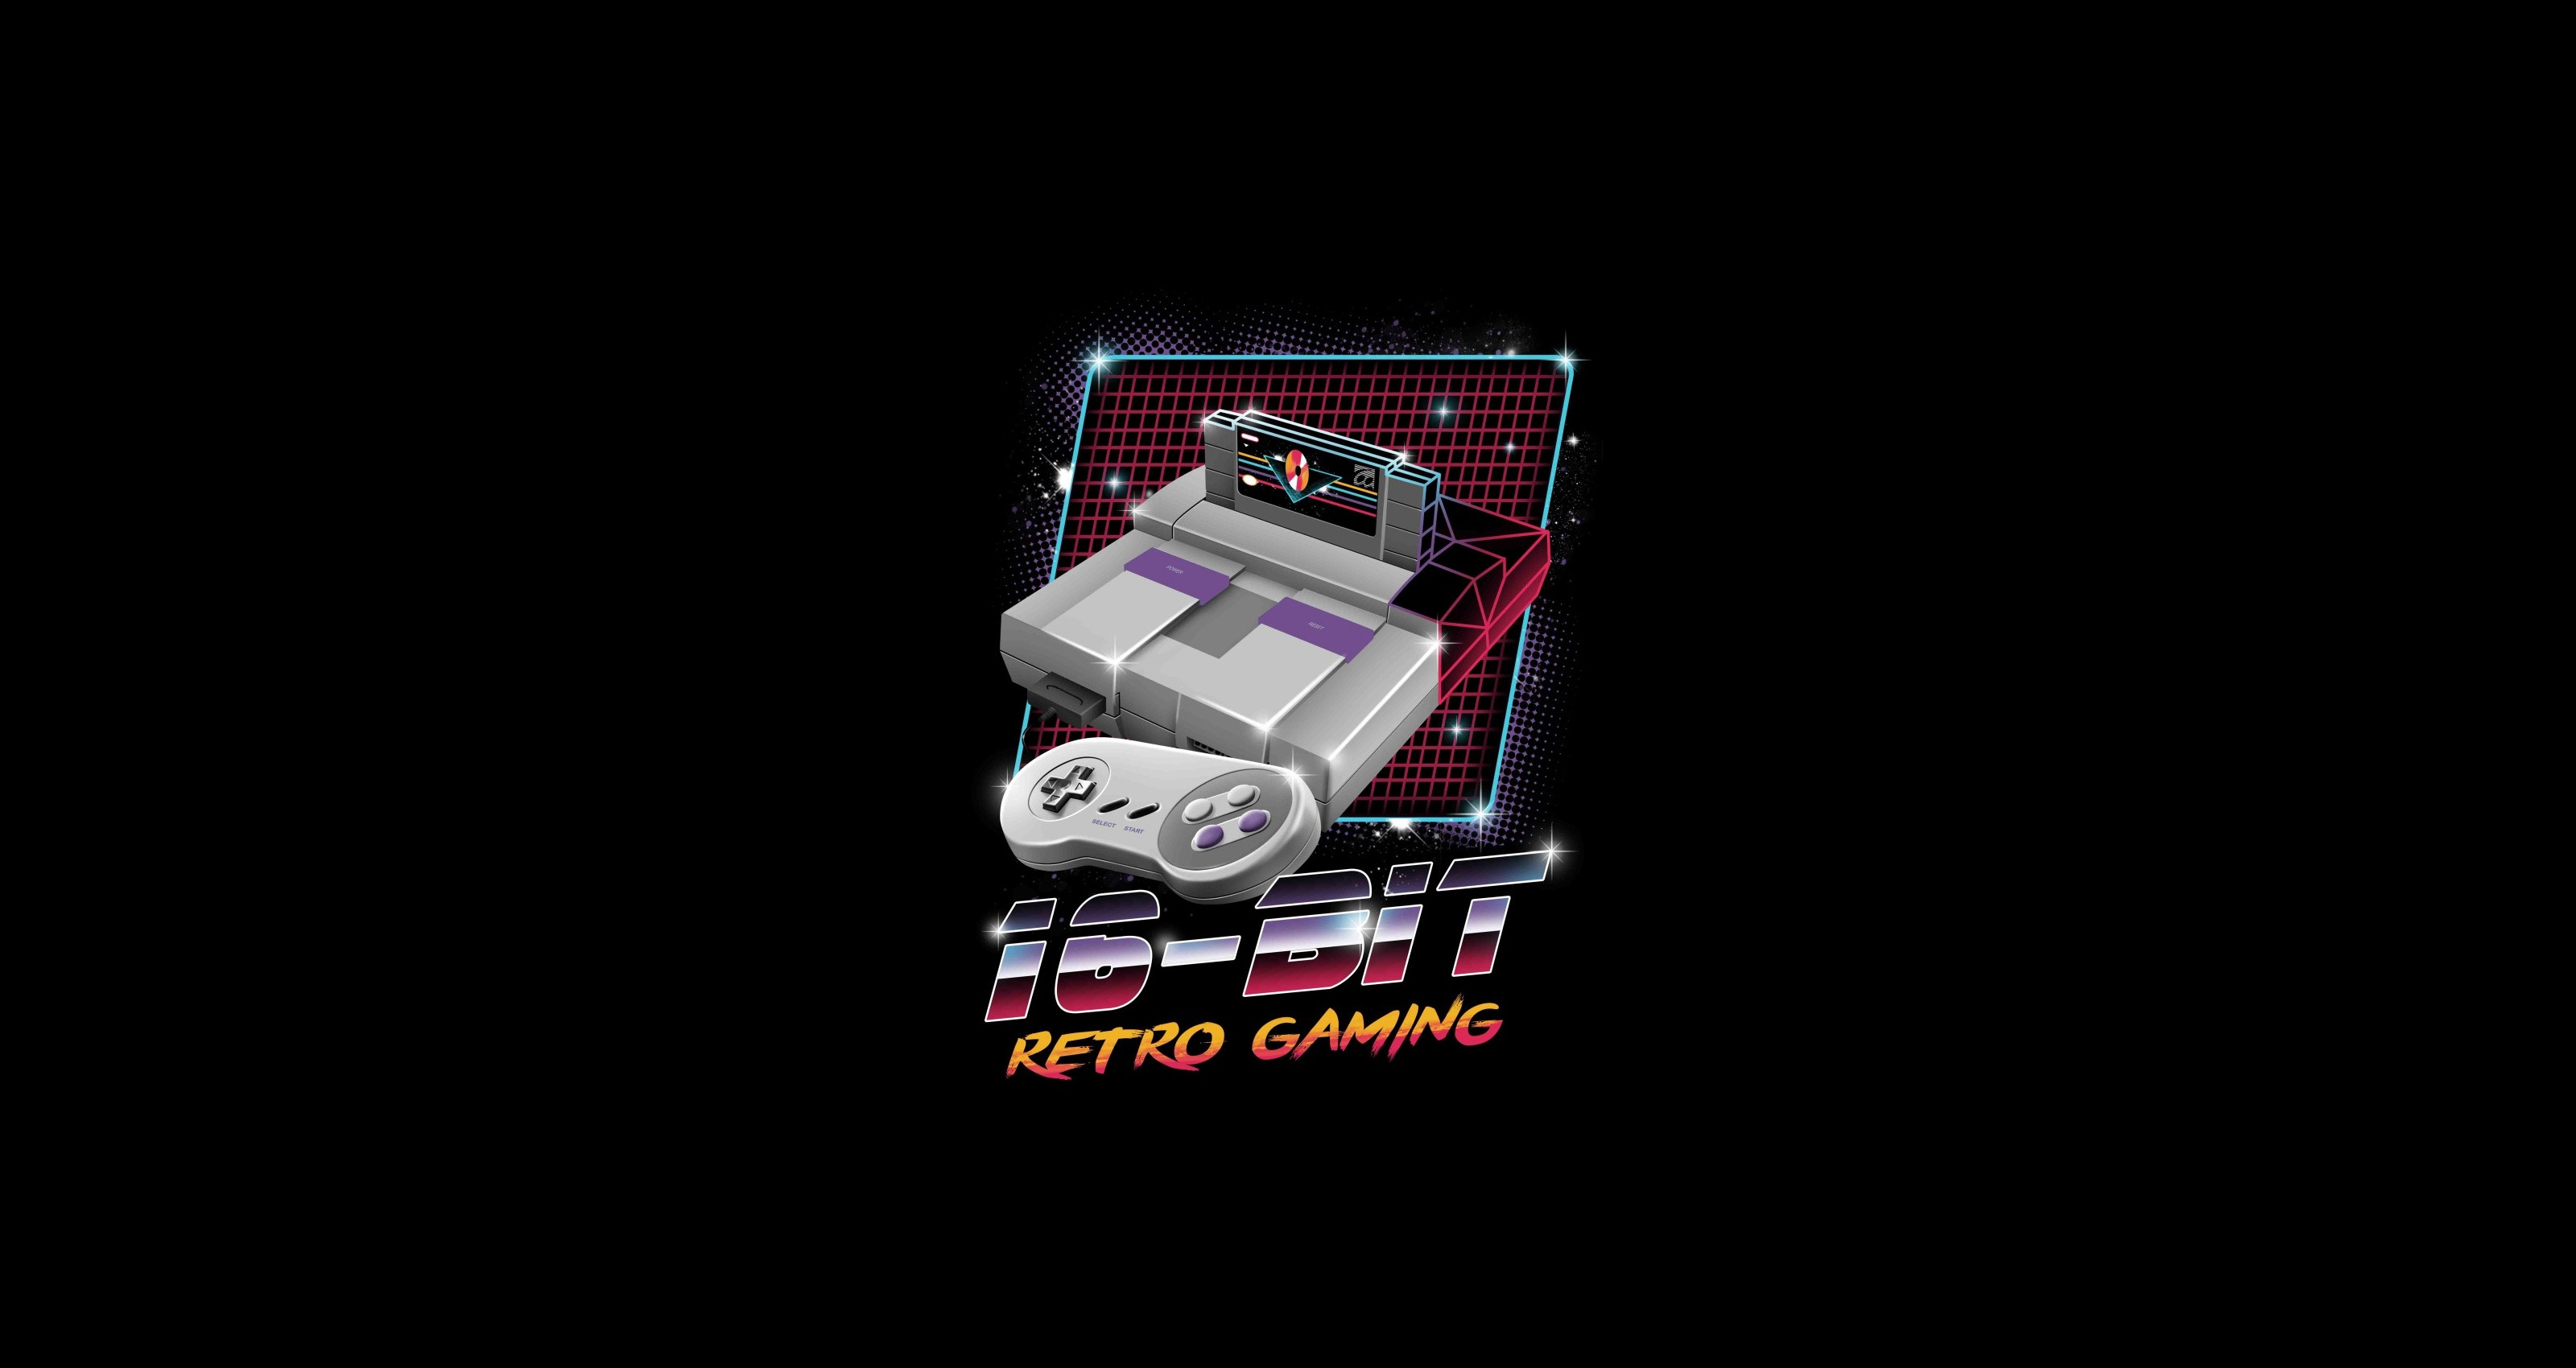 16 Bit Retro Games Video Games Super Nintendo Super Famicom Consoles Artwork Simple Background Ninte 3200x1700